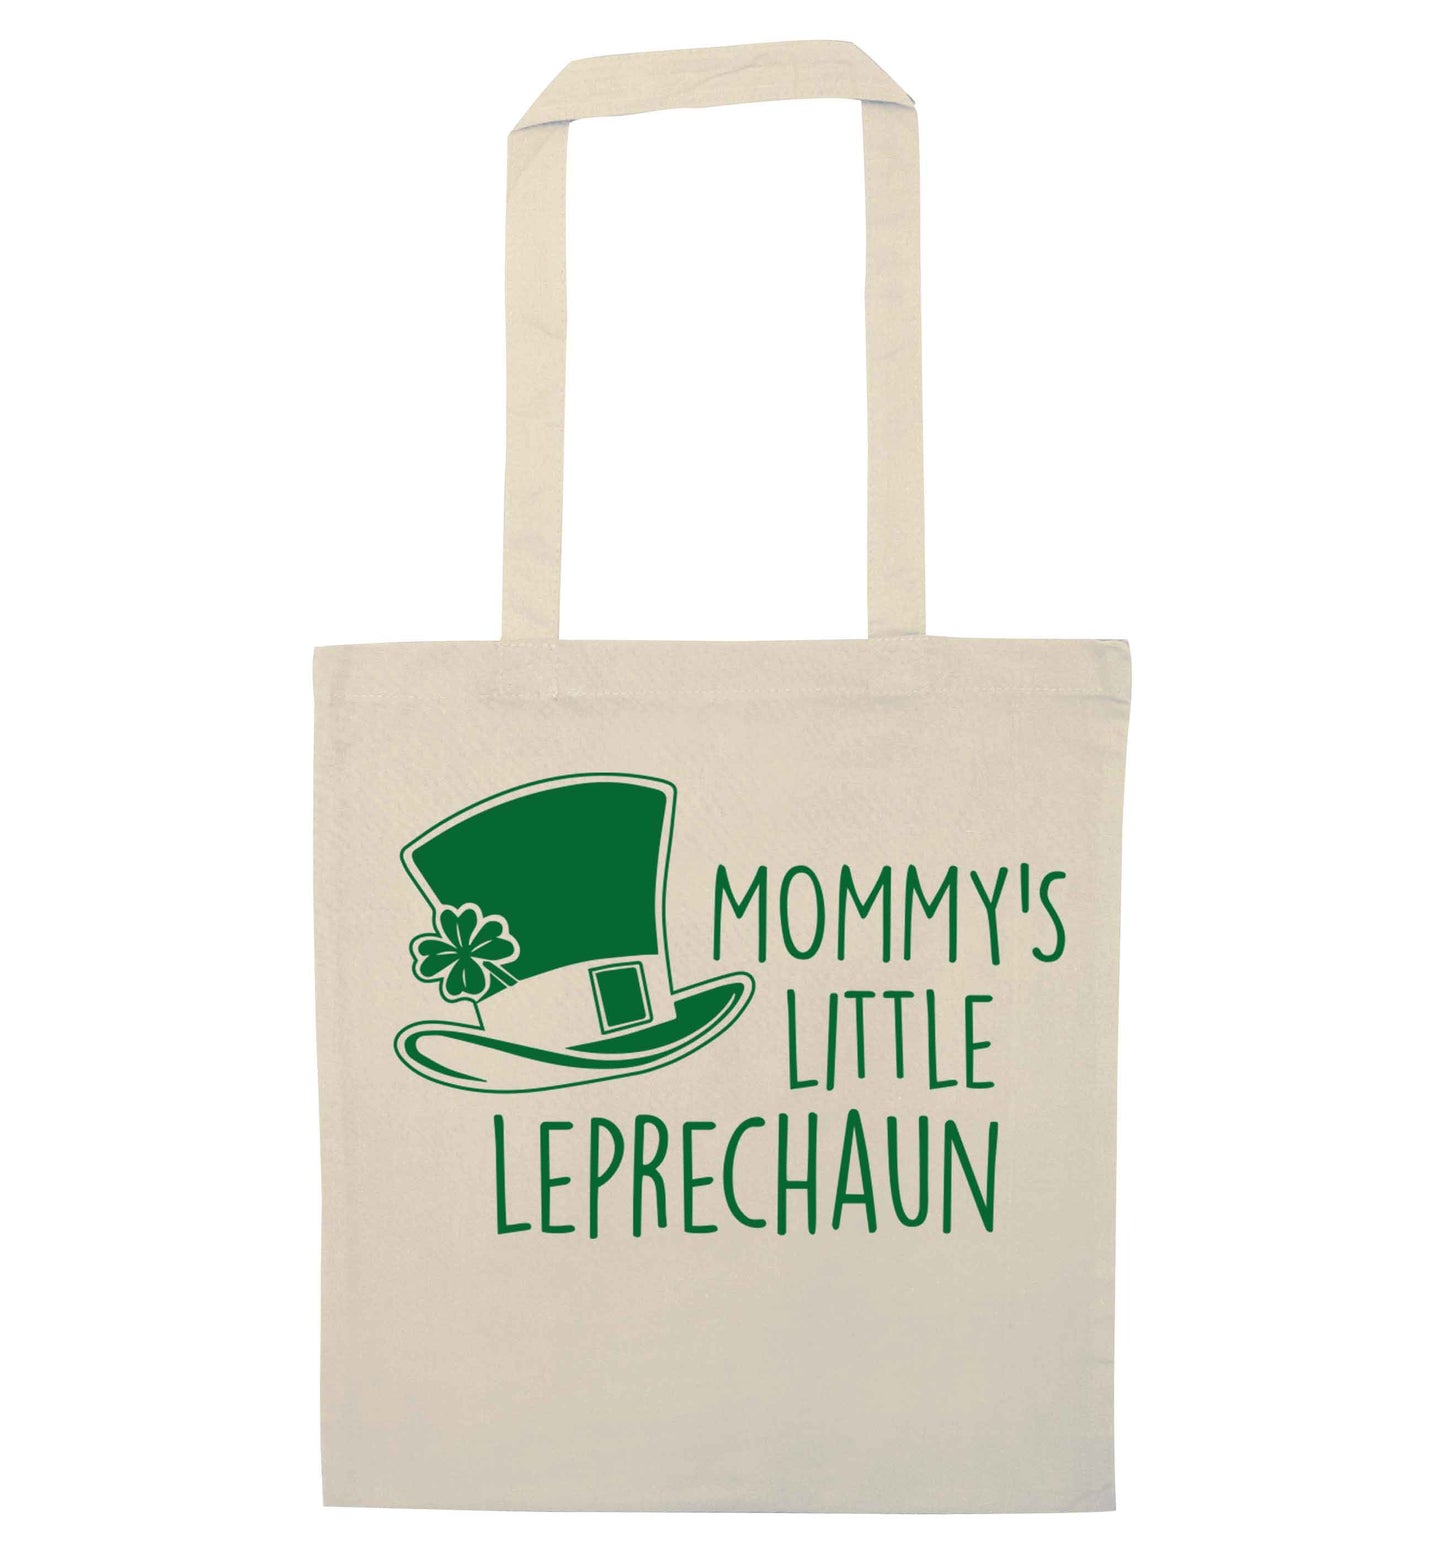 Mommy's little leprechaun natural tote bag